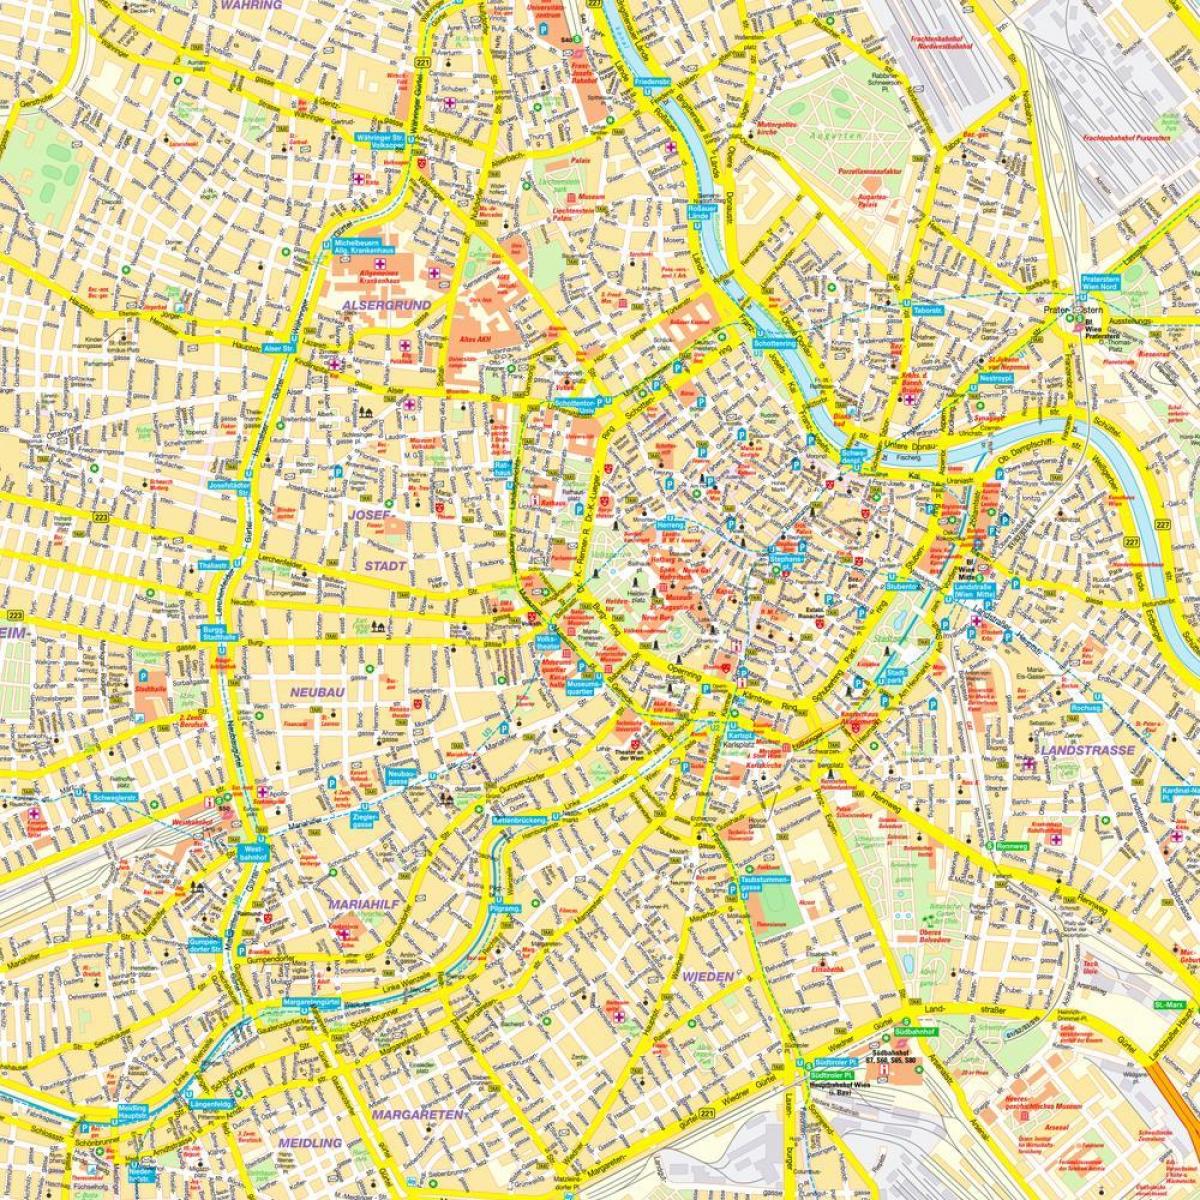 Wenen binnenstad kaart